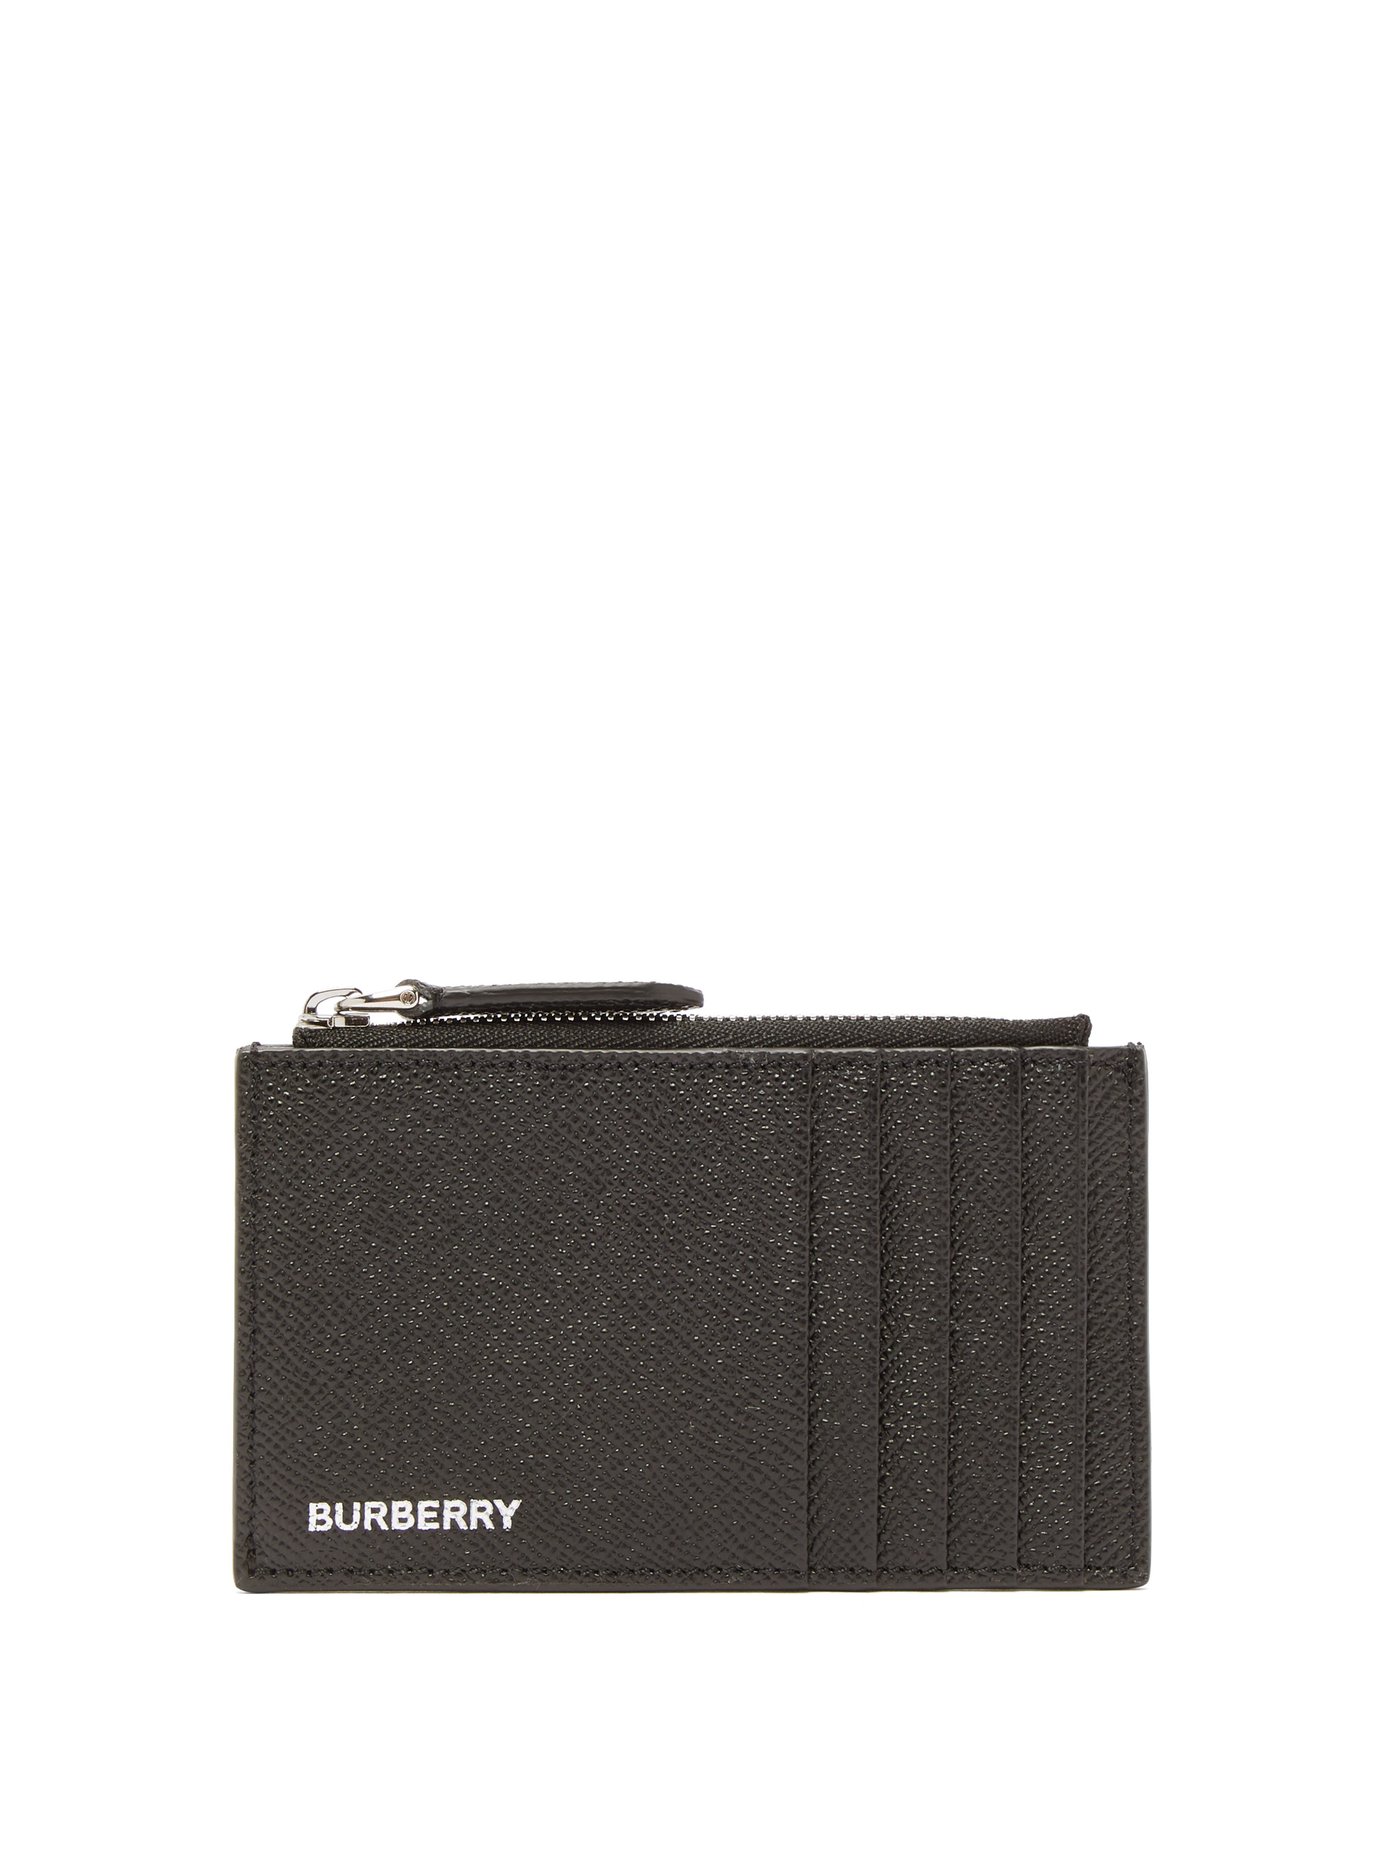 burberry zip card holder